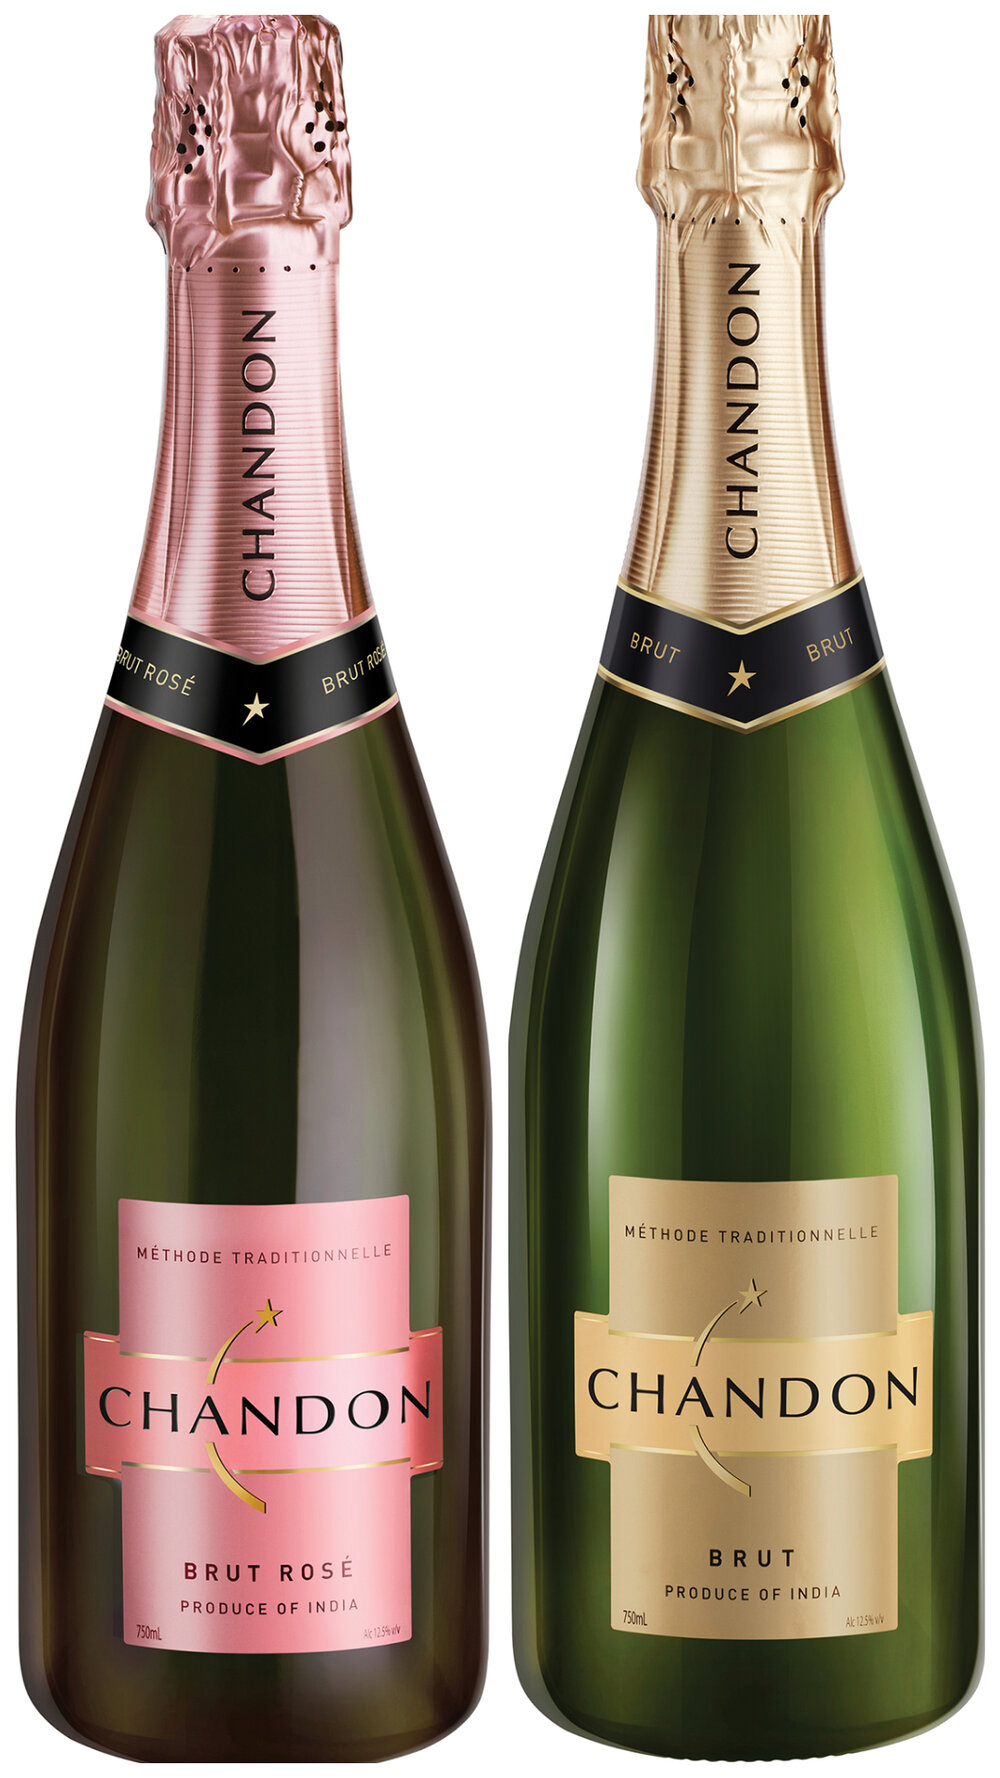 moët hennessy's sparkling wine brand chandon bags multiple international recognition awards in 2020 — www.hospemag.me